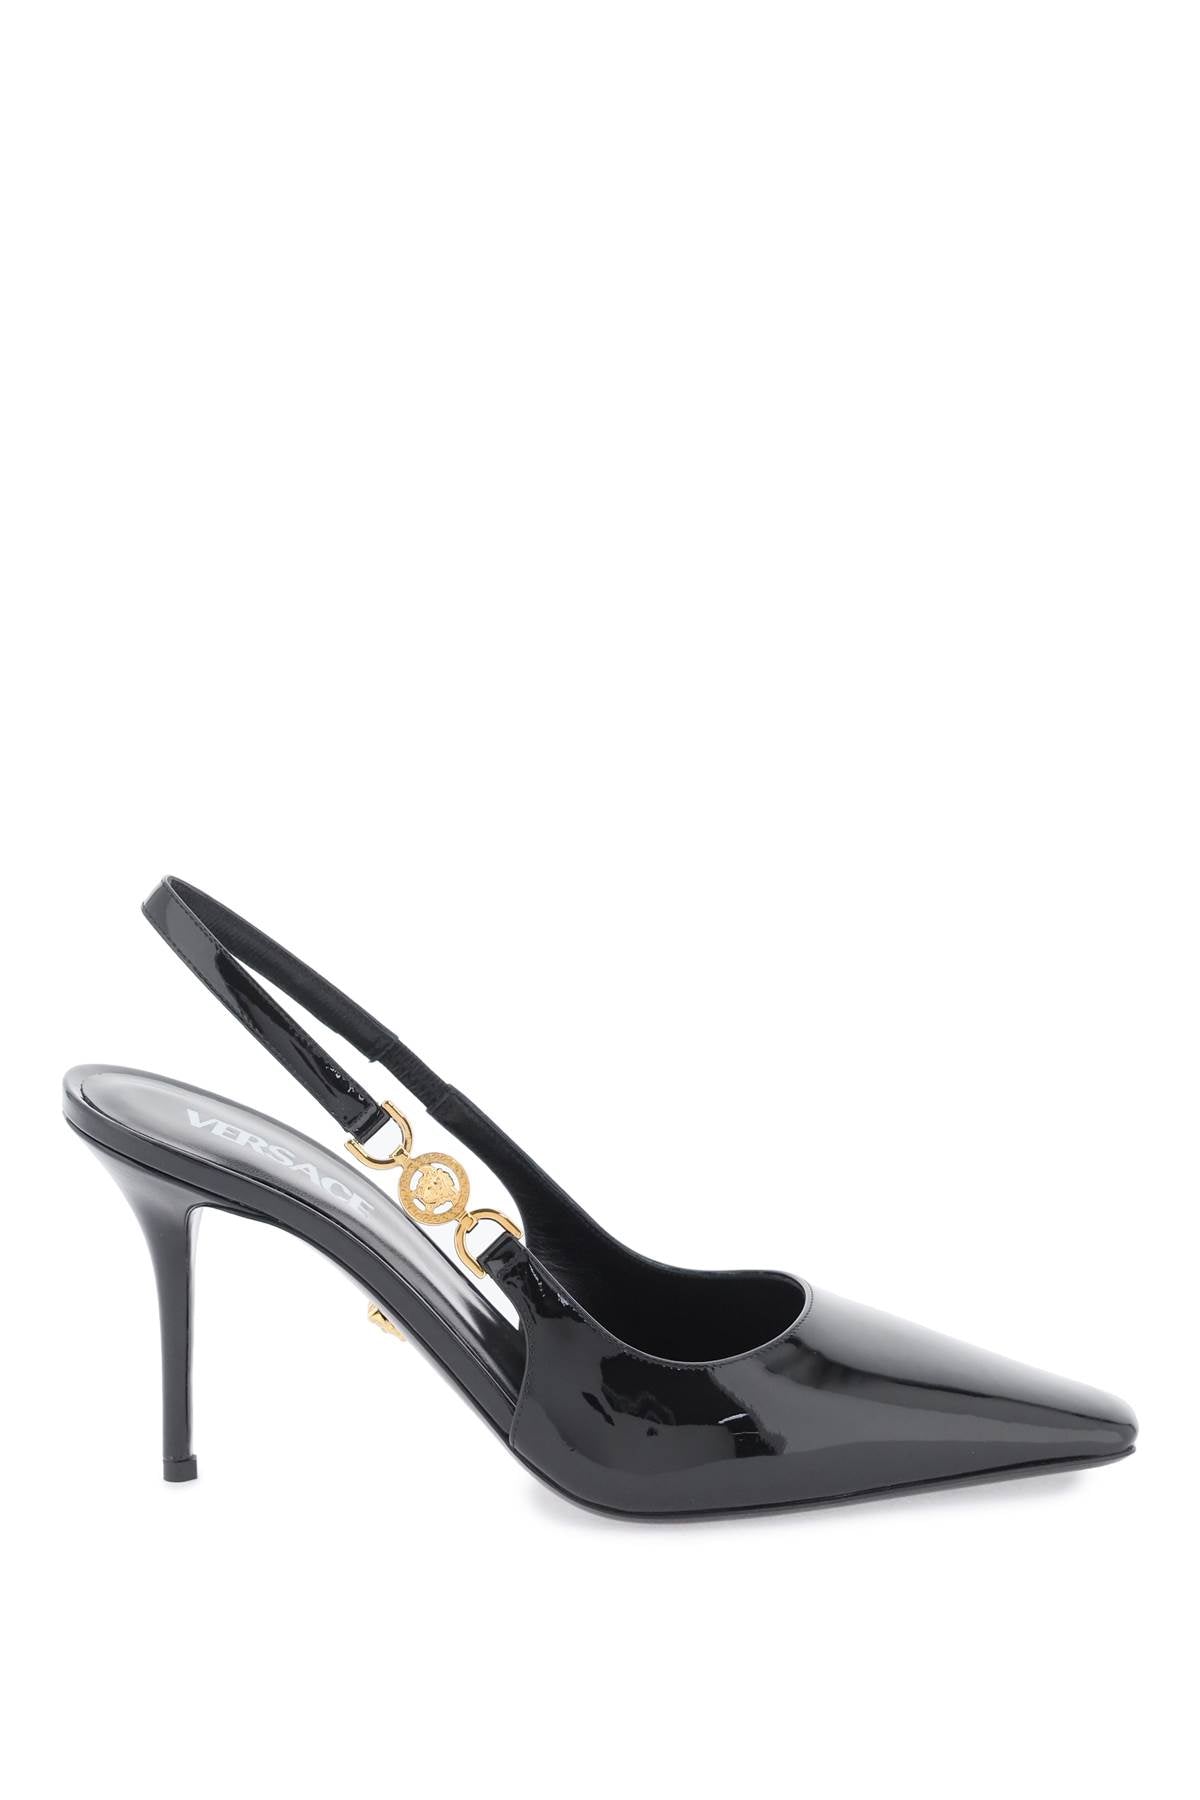 Versace 美杜莎 '95 露跟高跟鞋 1012428 D2VE 黑色 VERSACE 金色